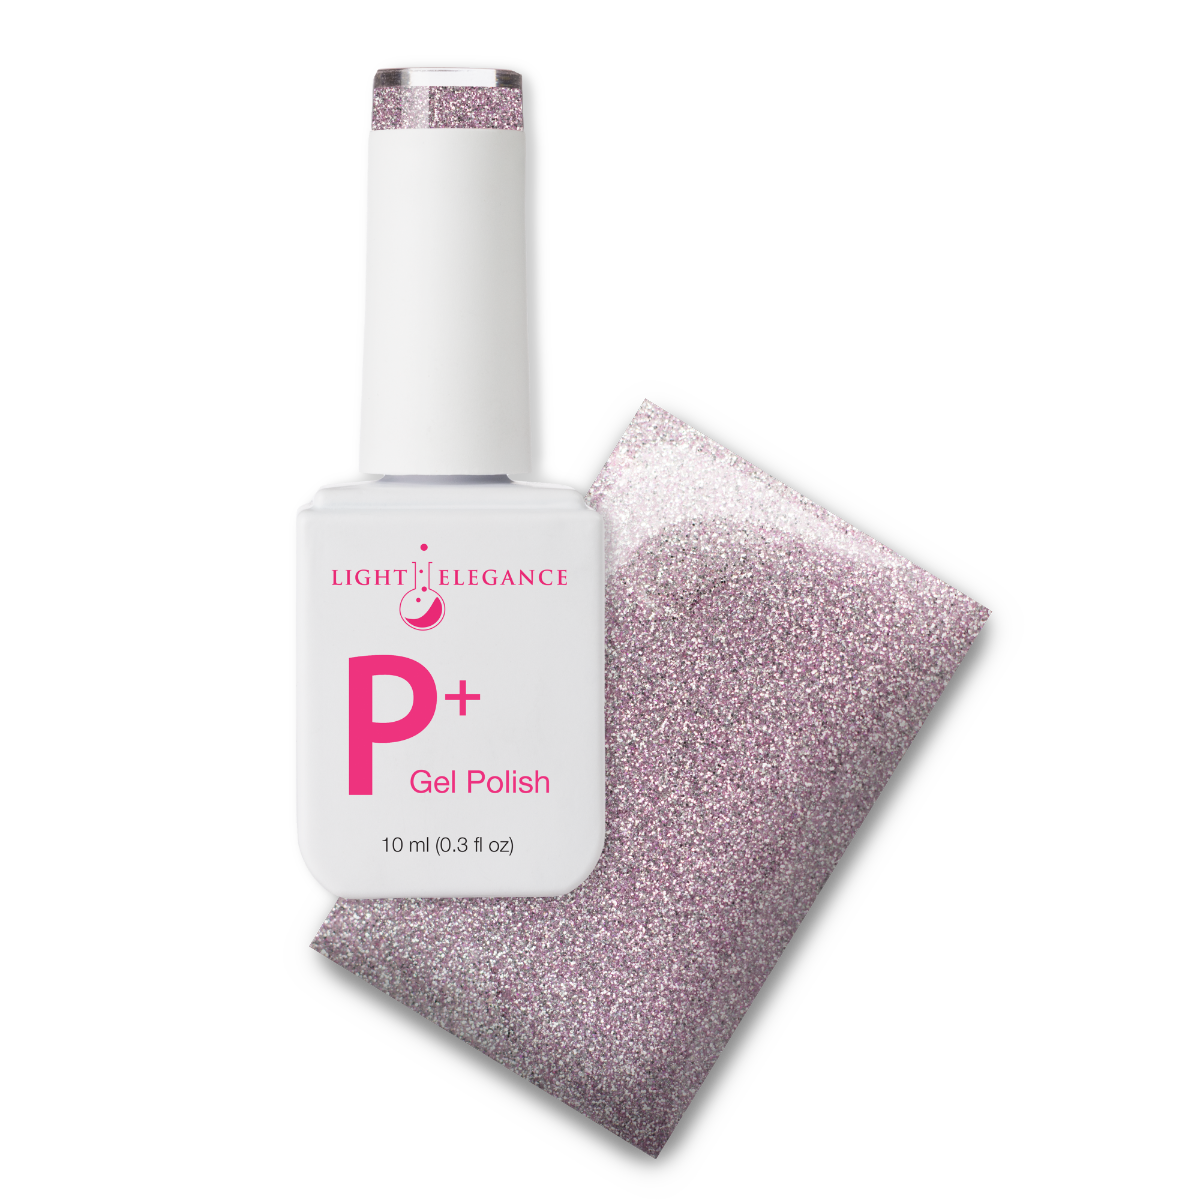 Light Elegance P+ Soak Off Glitter Gel - All Eyes on Me :: New Packaging